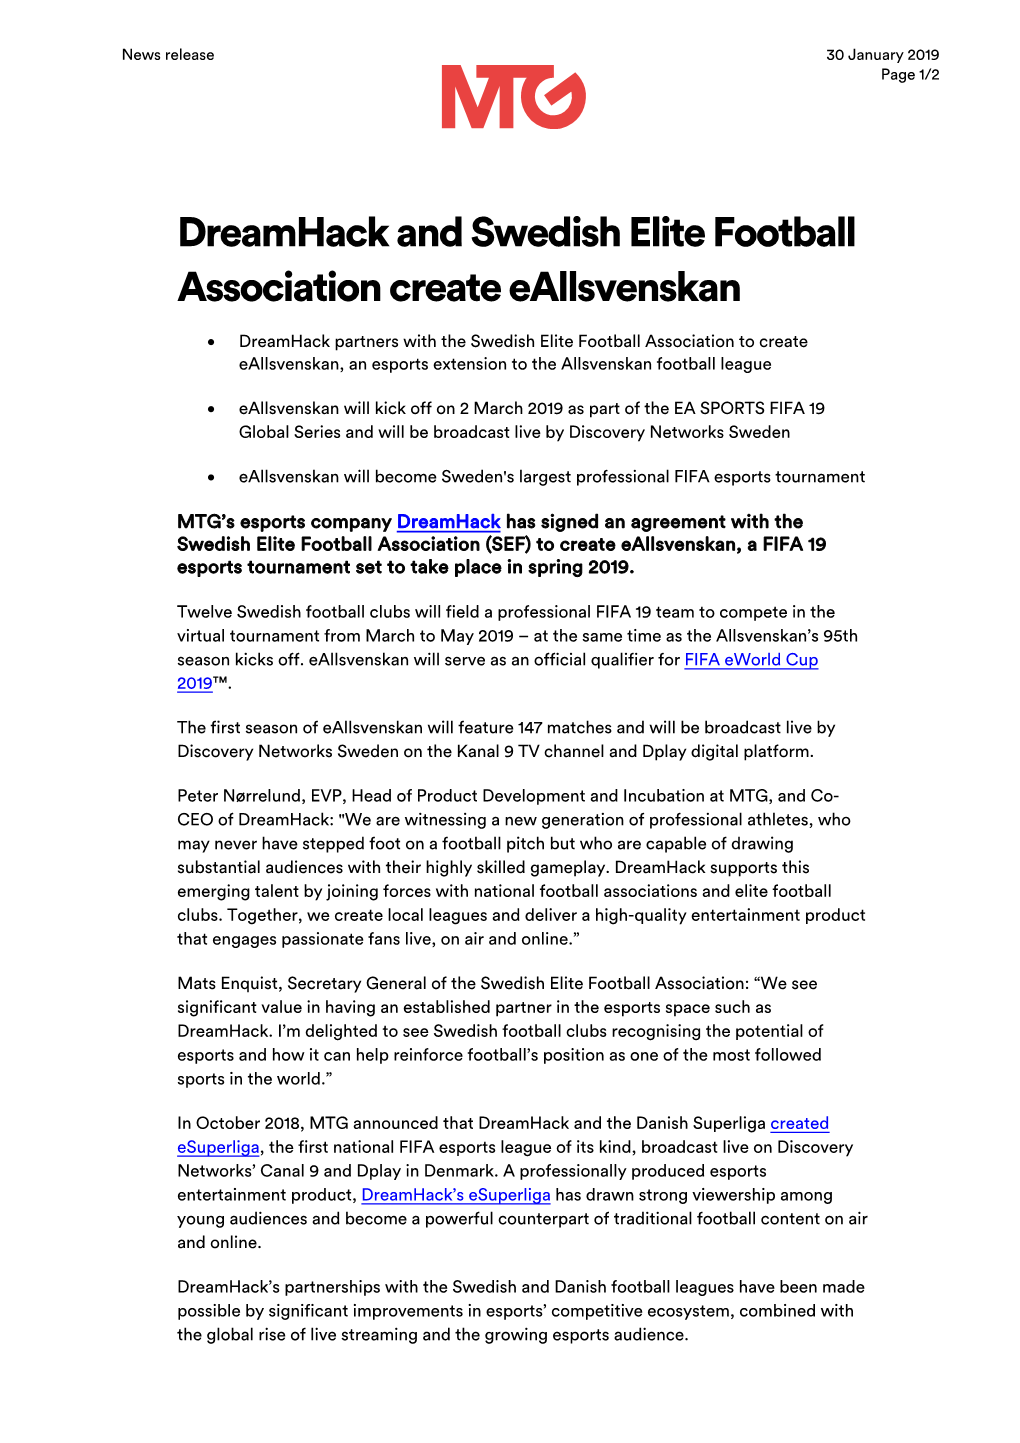 Dreamhack and Swedish Elite Football Association Create Eallsvenskan